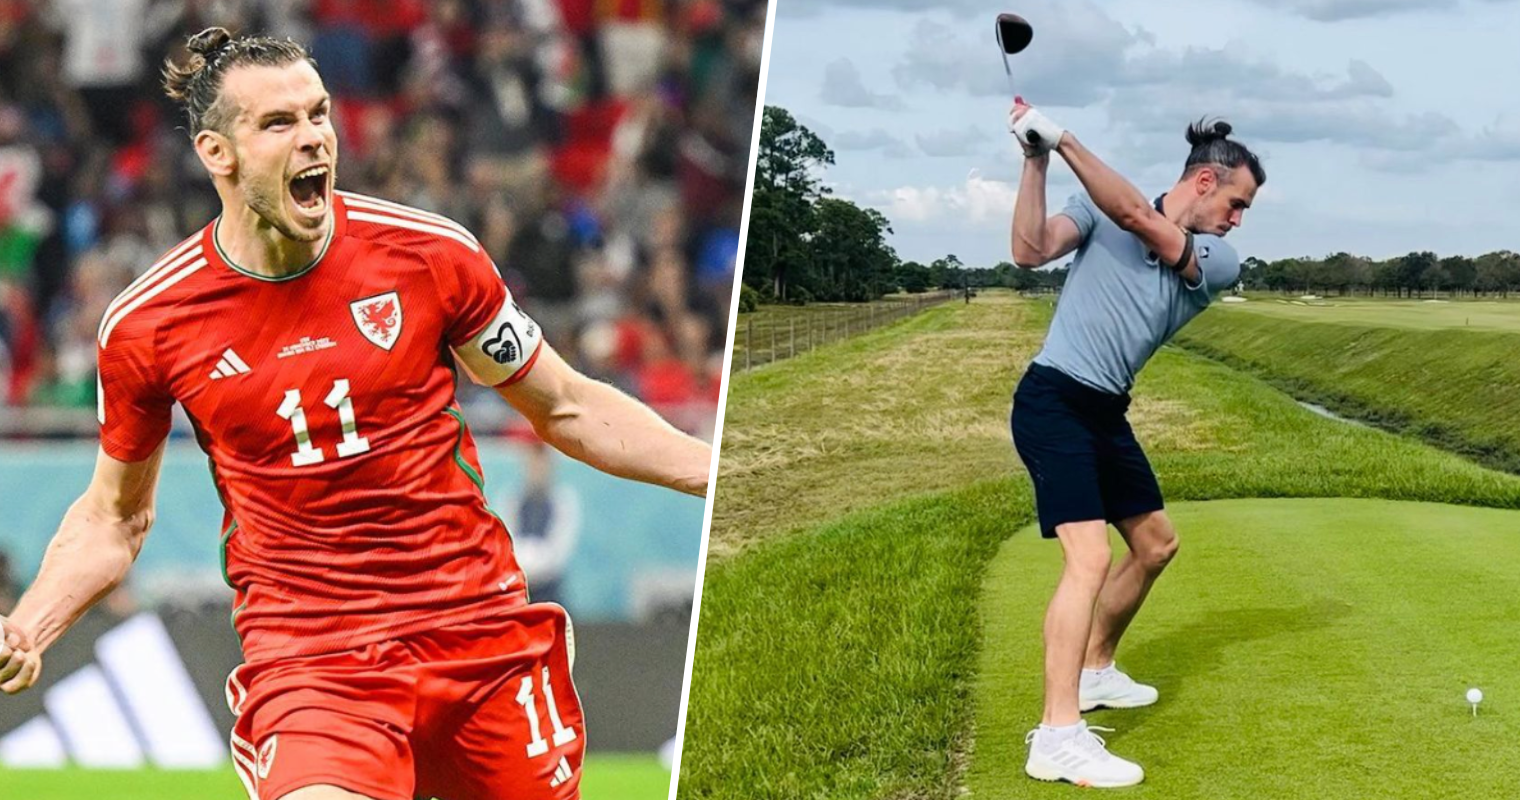 Gareth Bale set to make golf debut in PGA Tour event next month